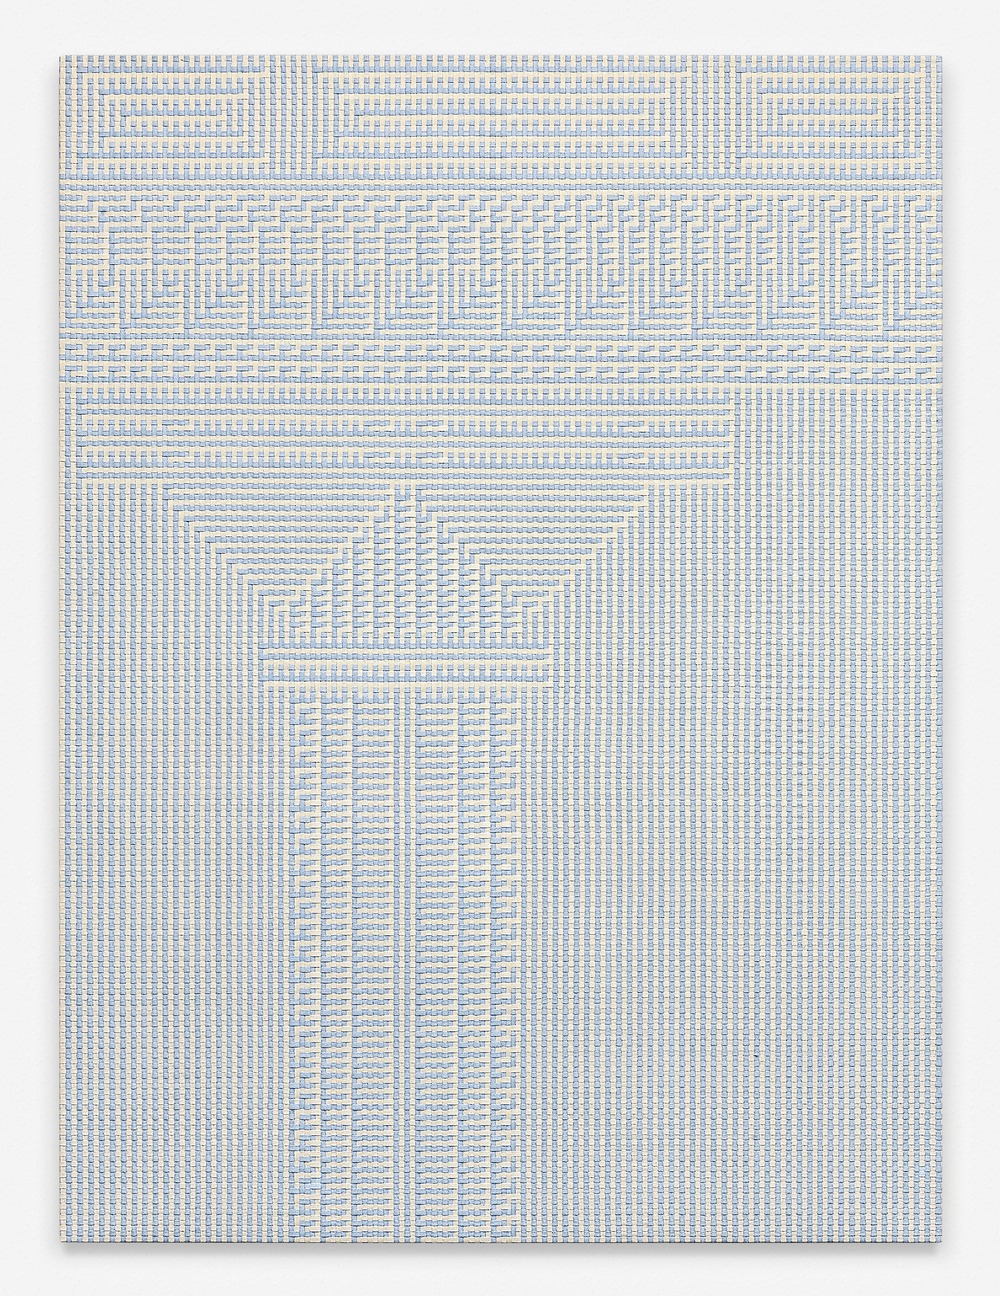 Тауба Ауэрбах (Tauba Auerbach). Современное искусство. Support and Elevation II, 2015